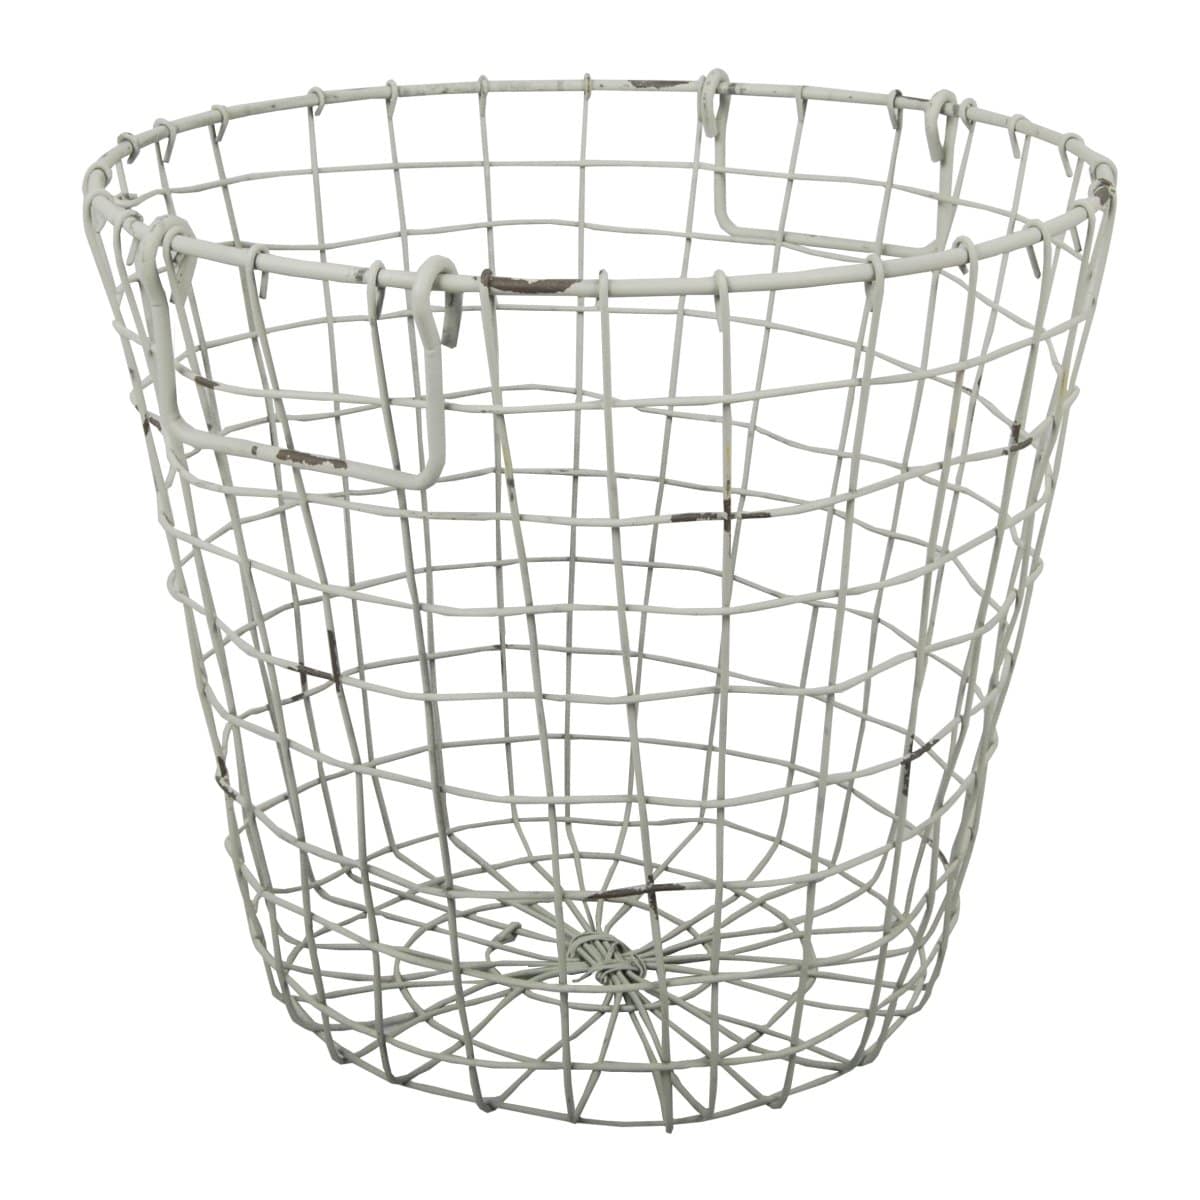 AB-D42474 Grafton Round Wire Basket, Antique White picket and rail